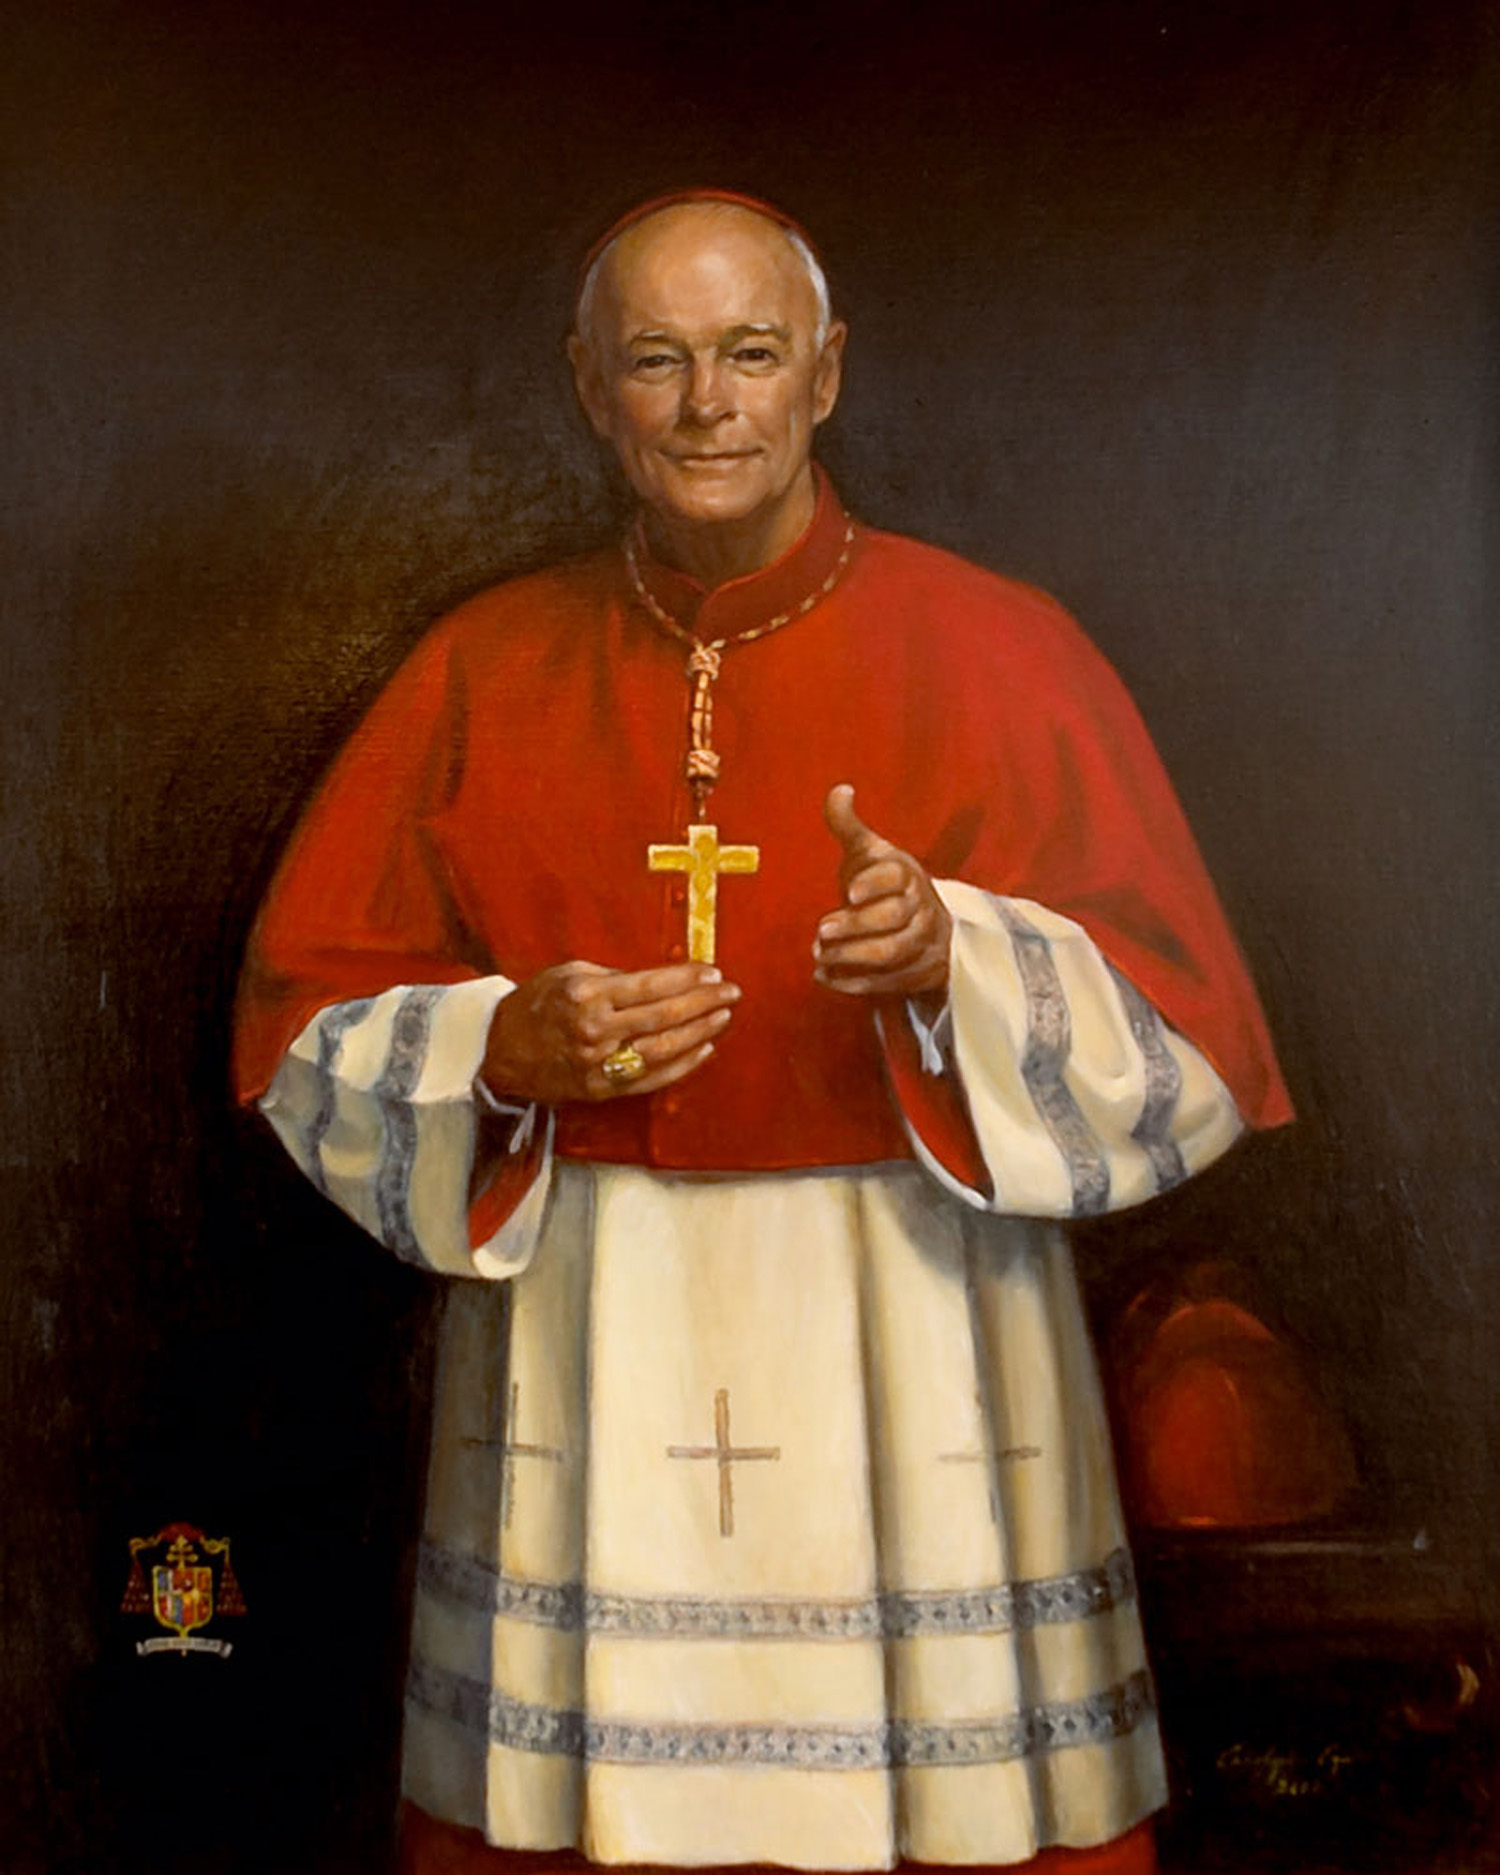 His Eminence Cardinal Egan, 36" x 42". Commission